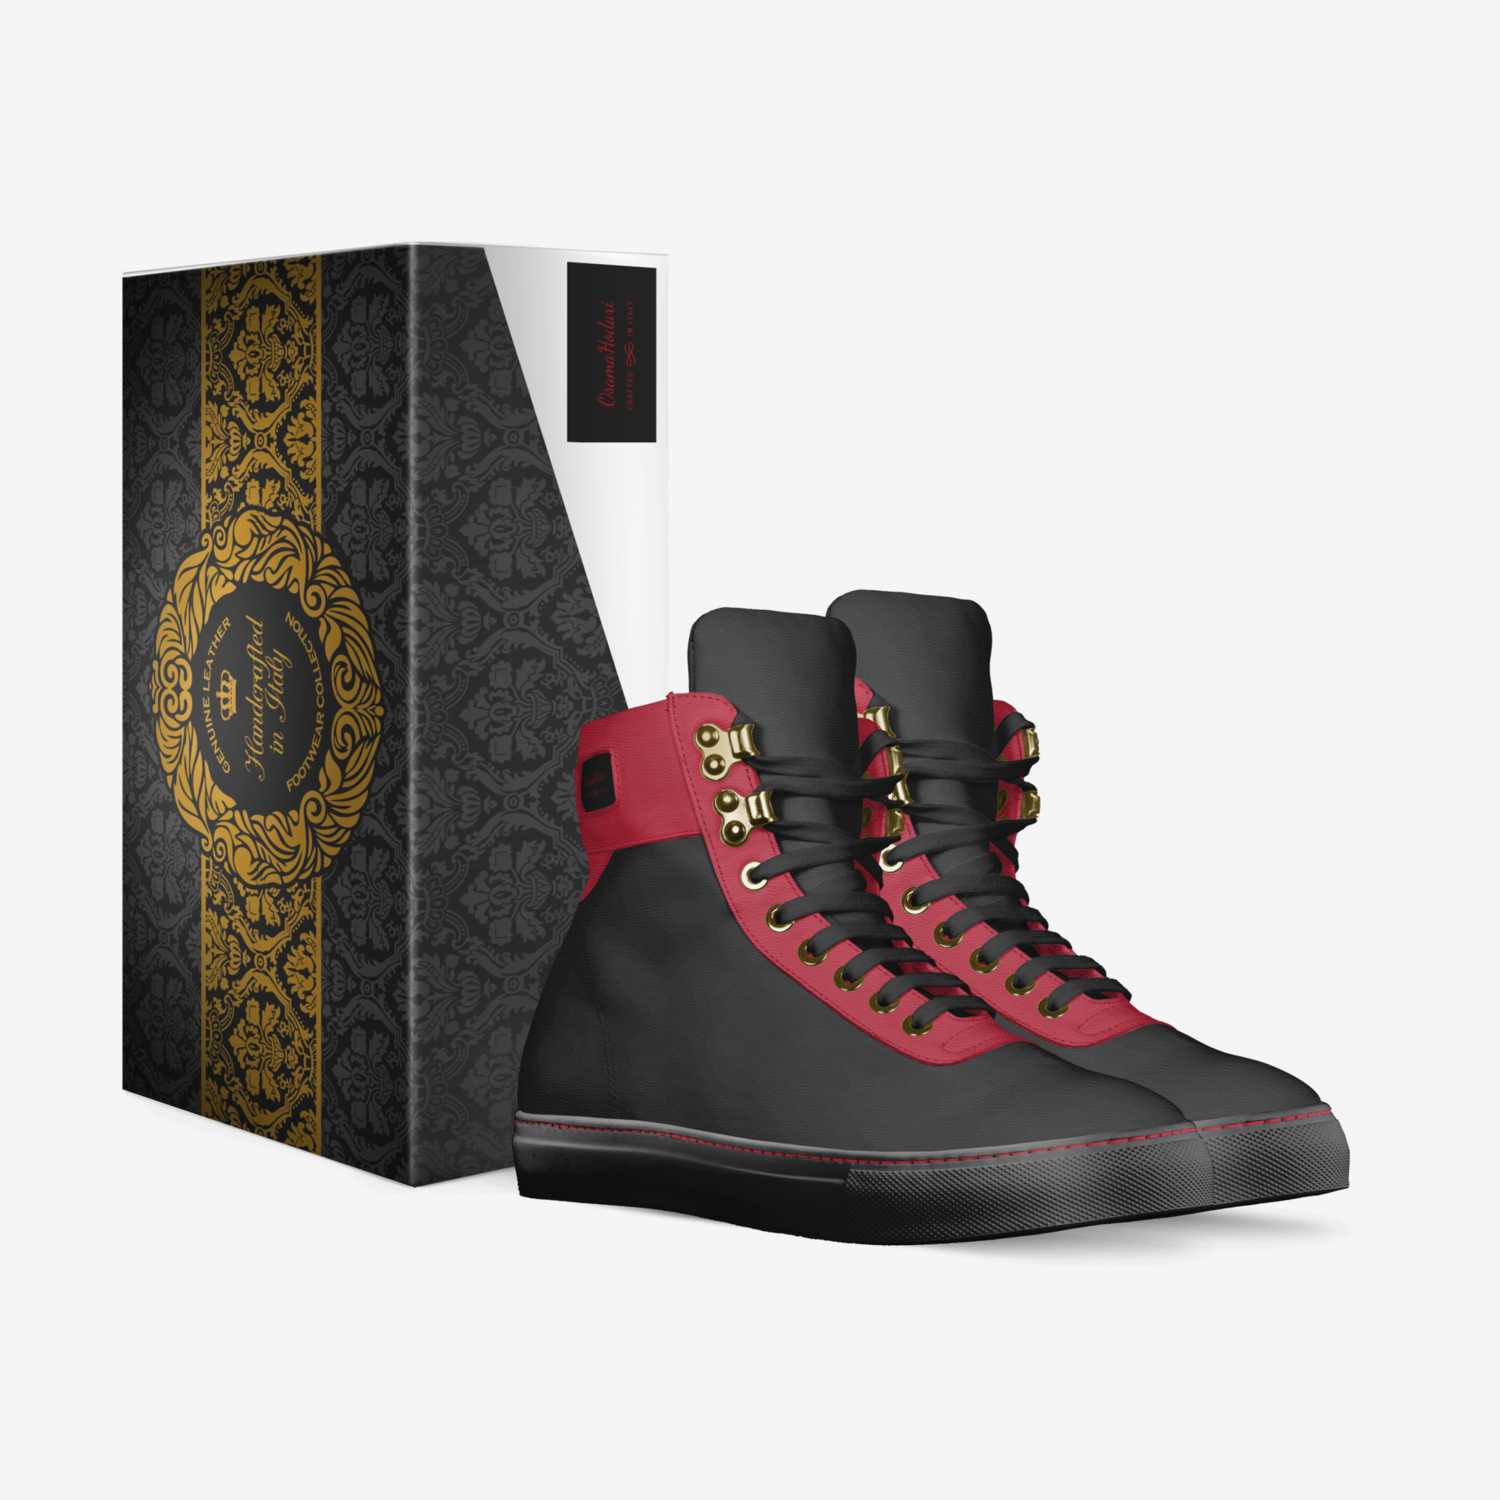 OsamaHodari custom made in Italy shoes by Osama Hodari | Box view